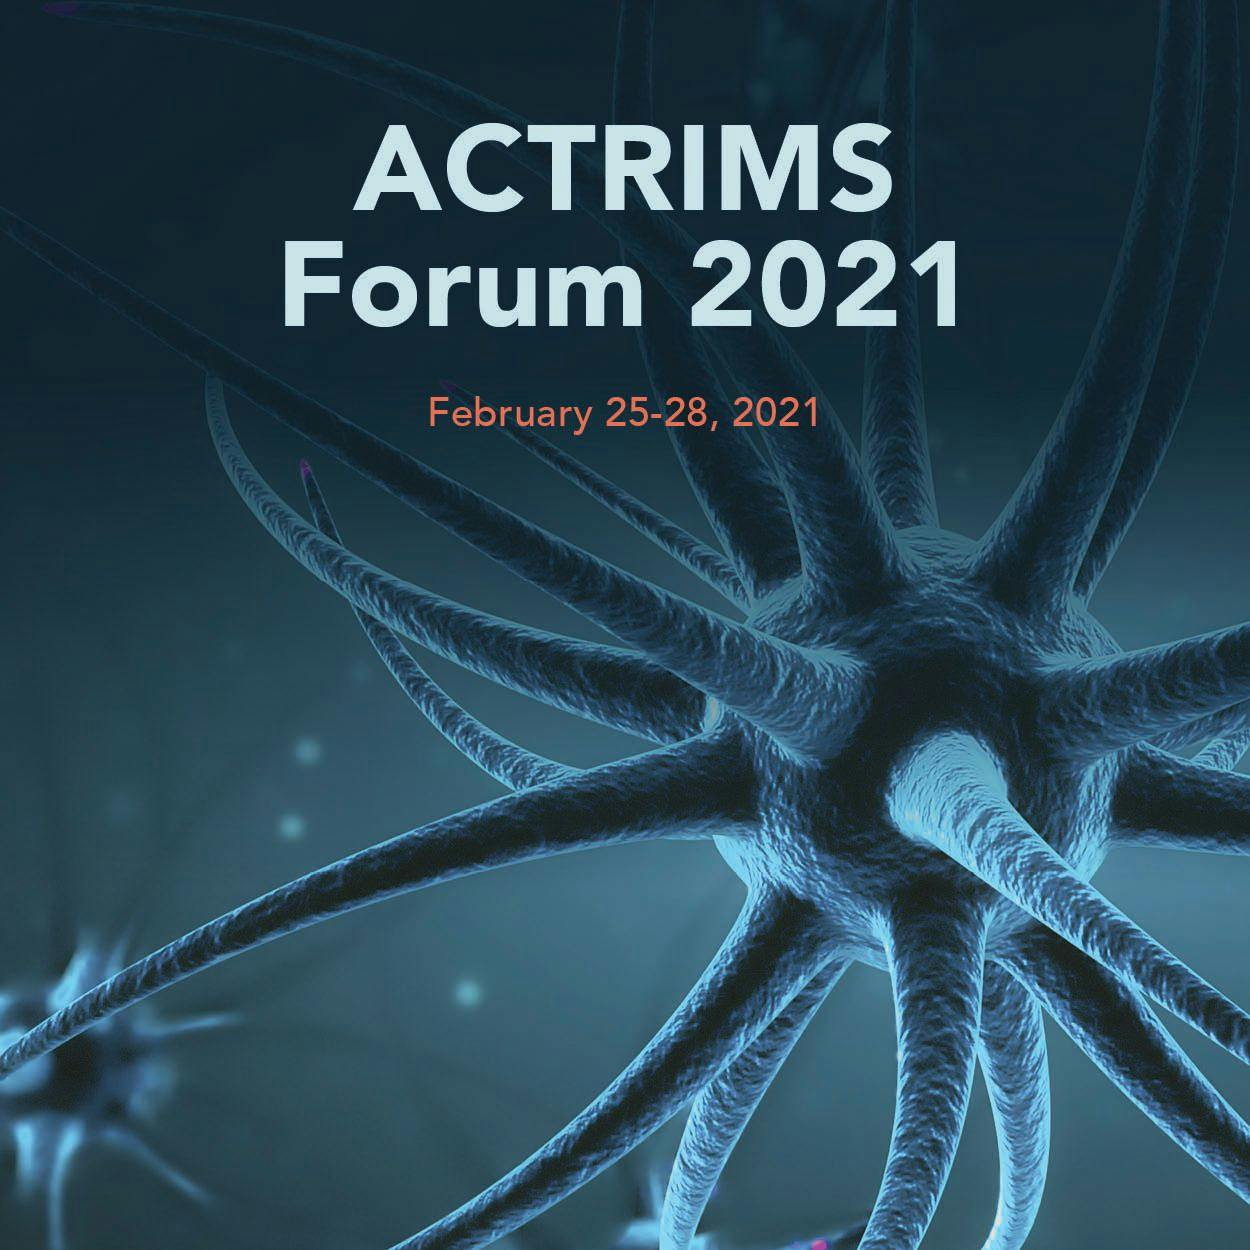 ACTRIMS Forum 2021: Top Expert Interviews